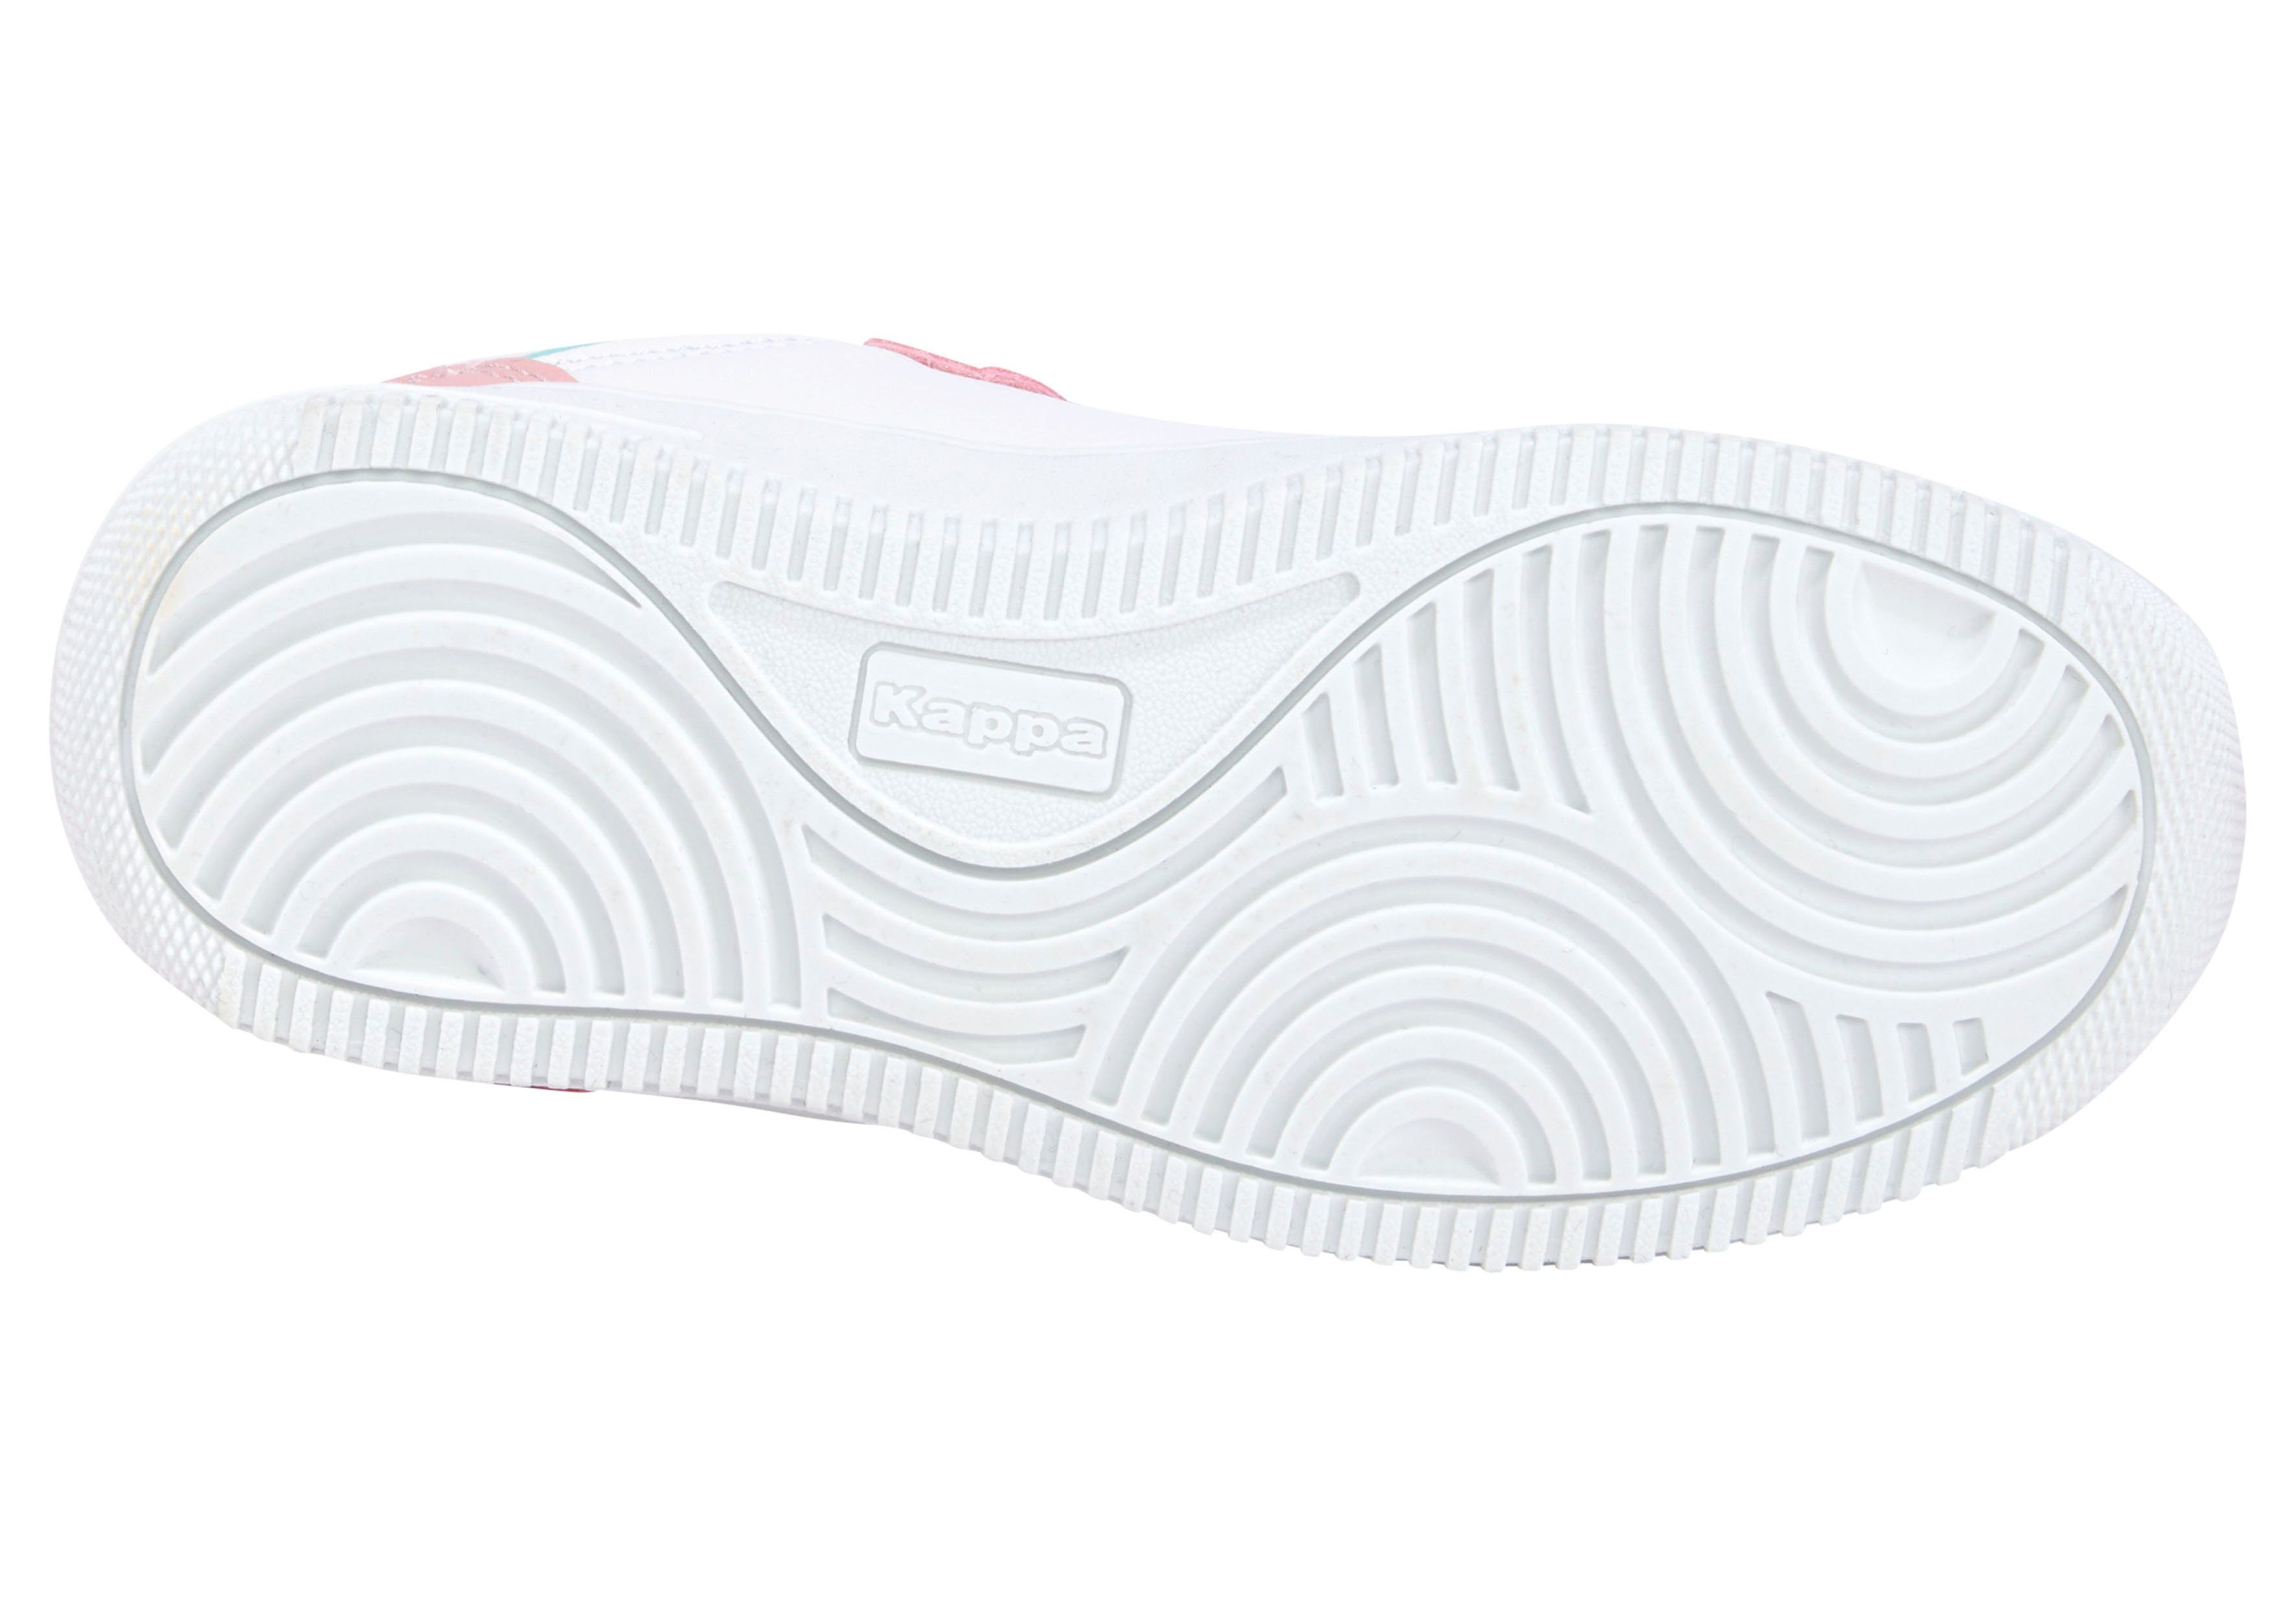 rosa-weiß Kappa Sneaker